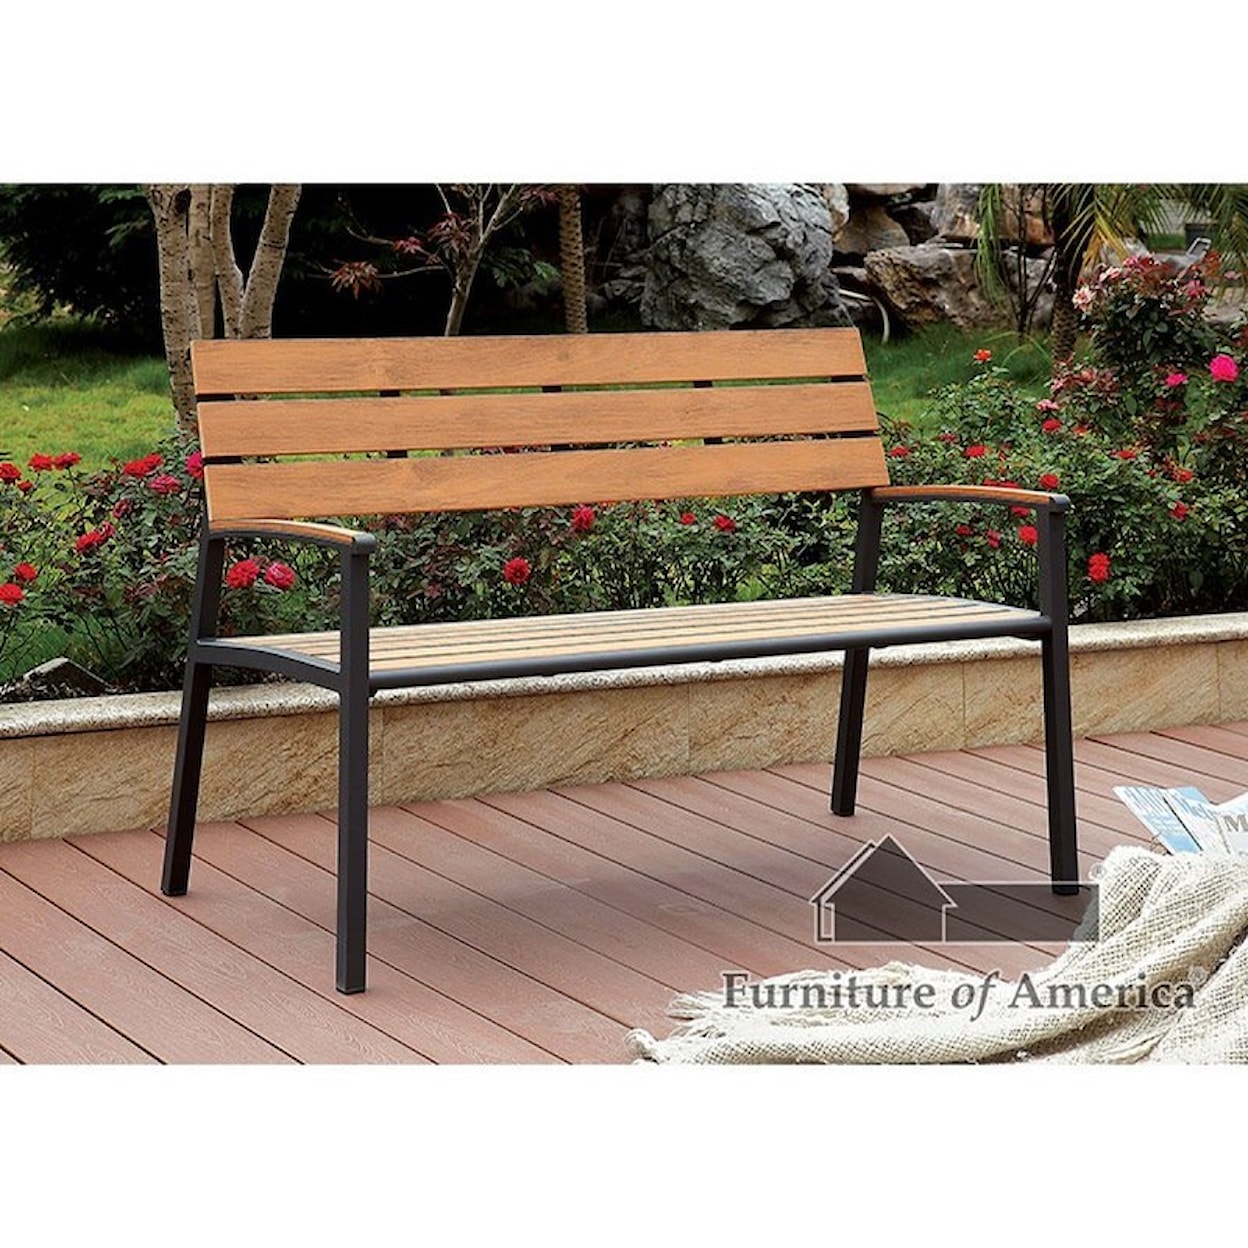 Furniture of America Isha Outdoor Bench